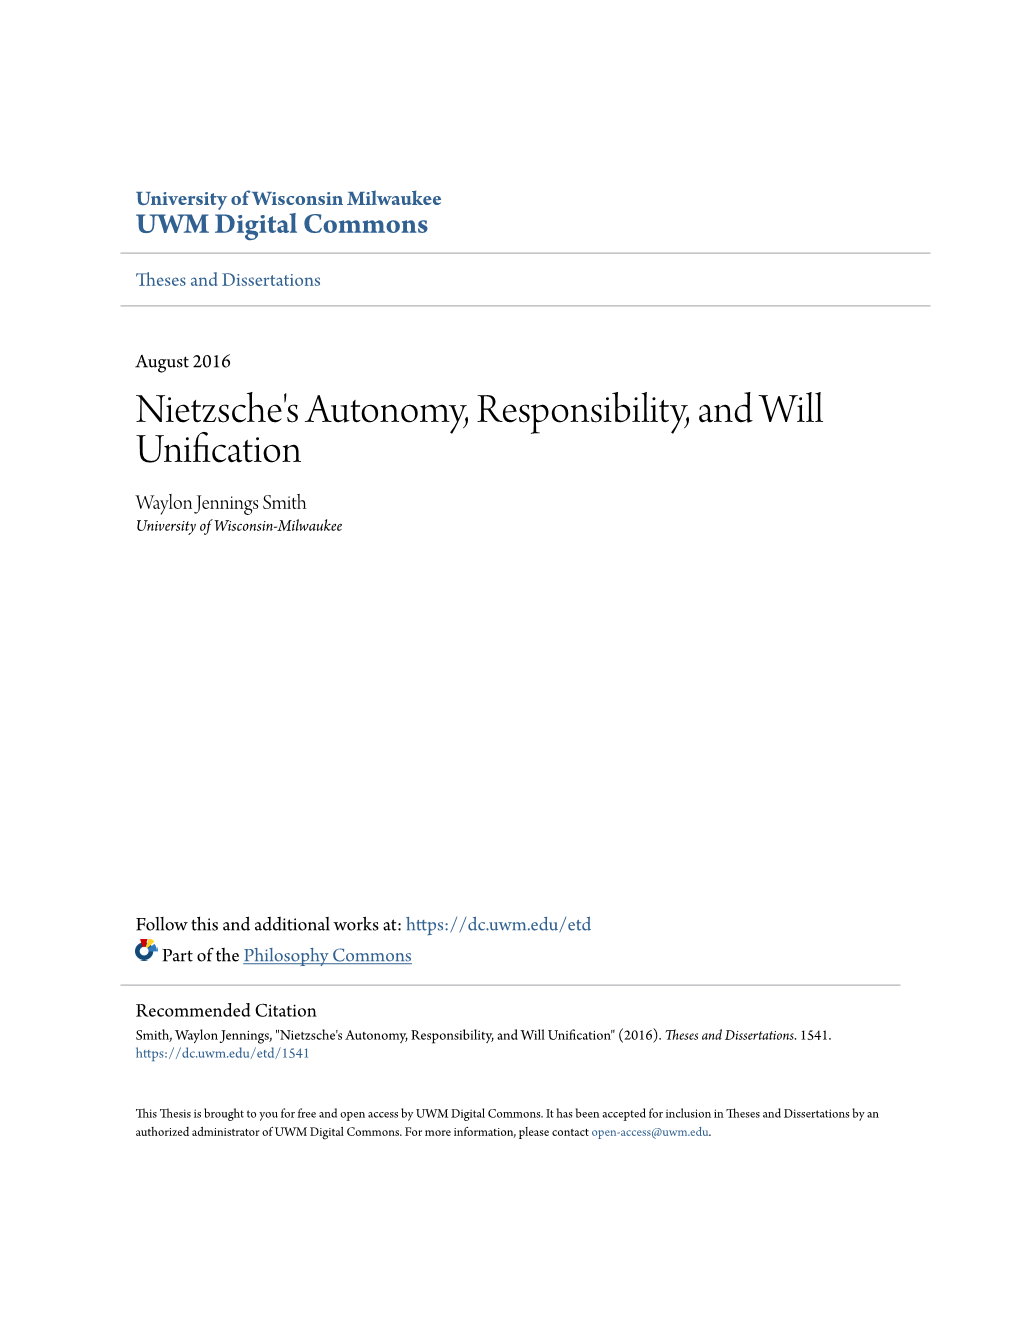 Nietzsche's Autonomy, Responsibility, and Will Unification Waylon Jennings Smith University of Wisconsin-Milwaukee